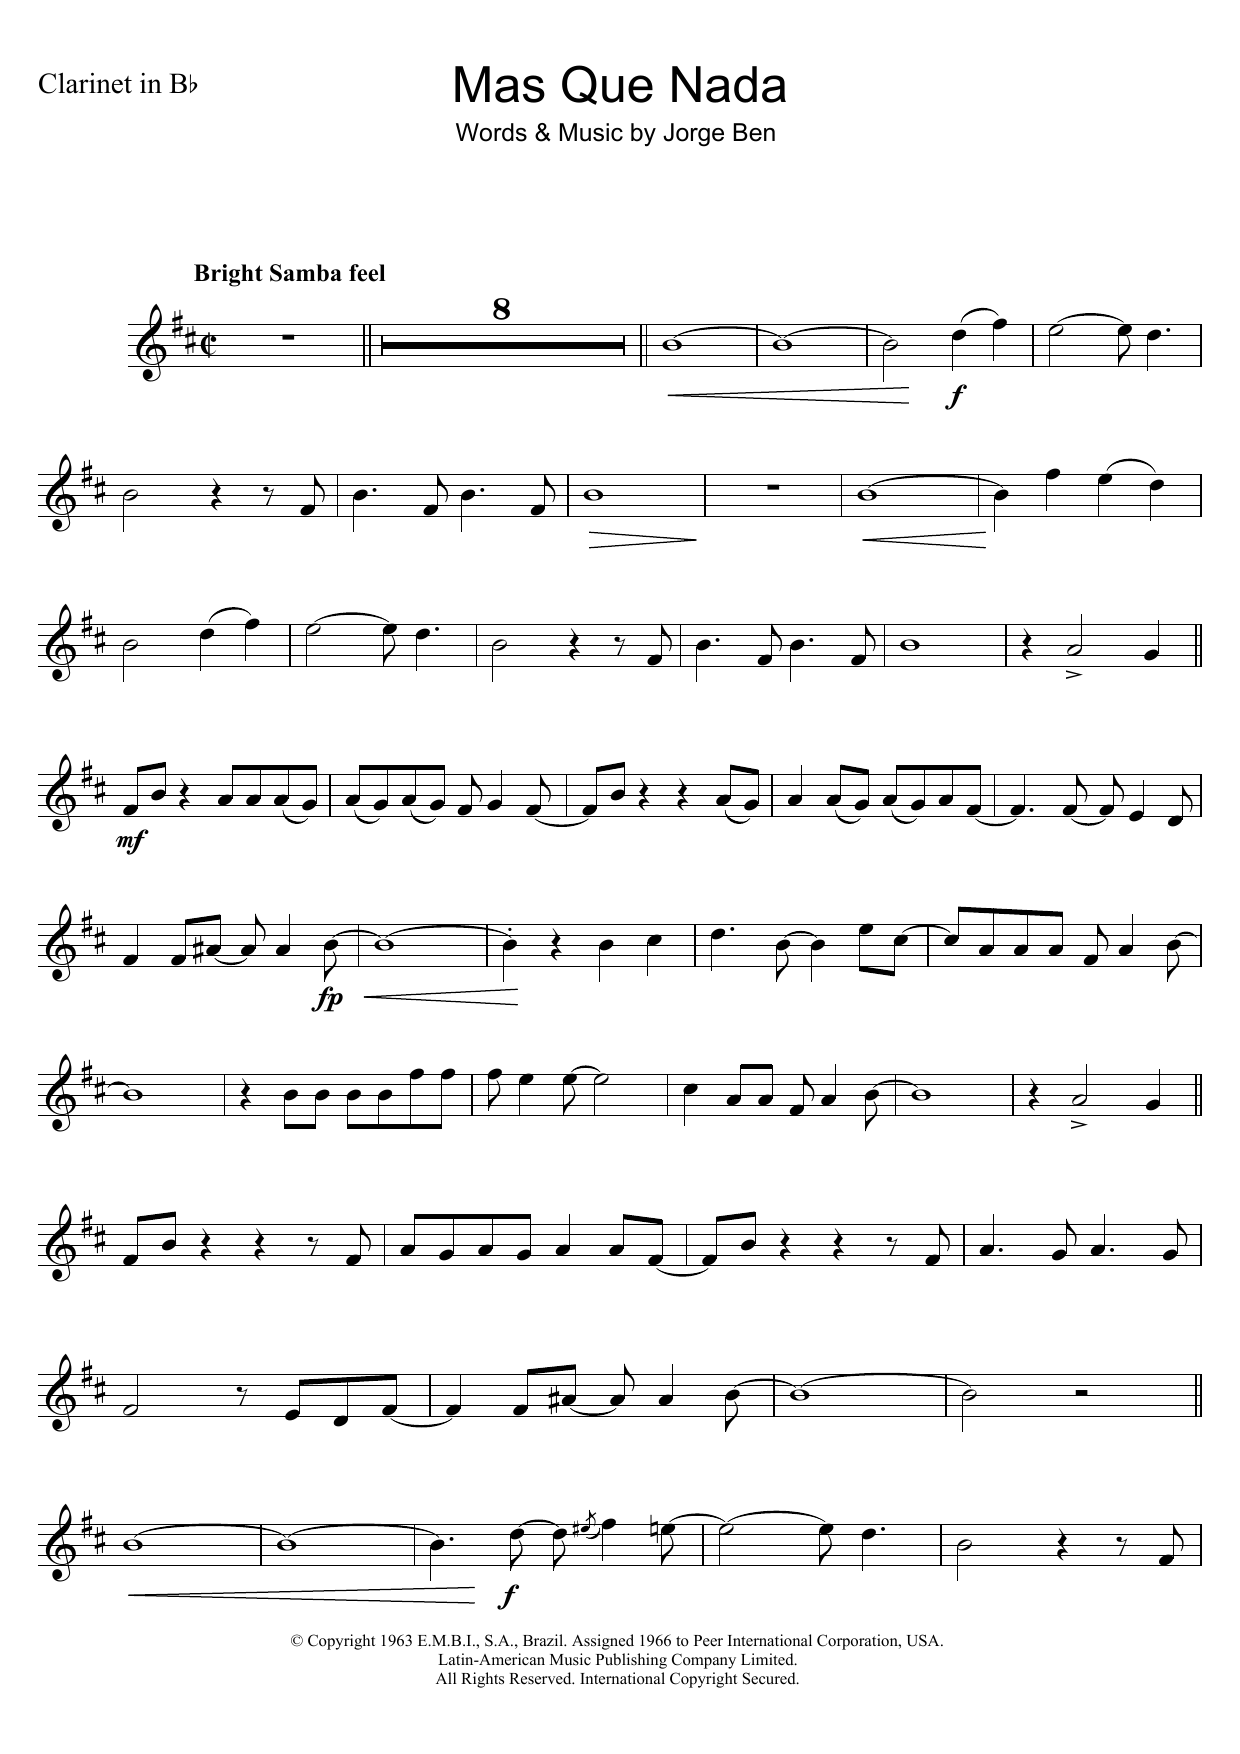 Jorge Ben Mas Que Nada (Say No More) Sheet Music Notes & Chords for Piano, Vocal & Guitar (Right-Hand Melody) - Download or Print PDF